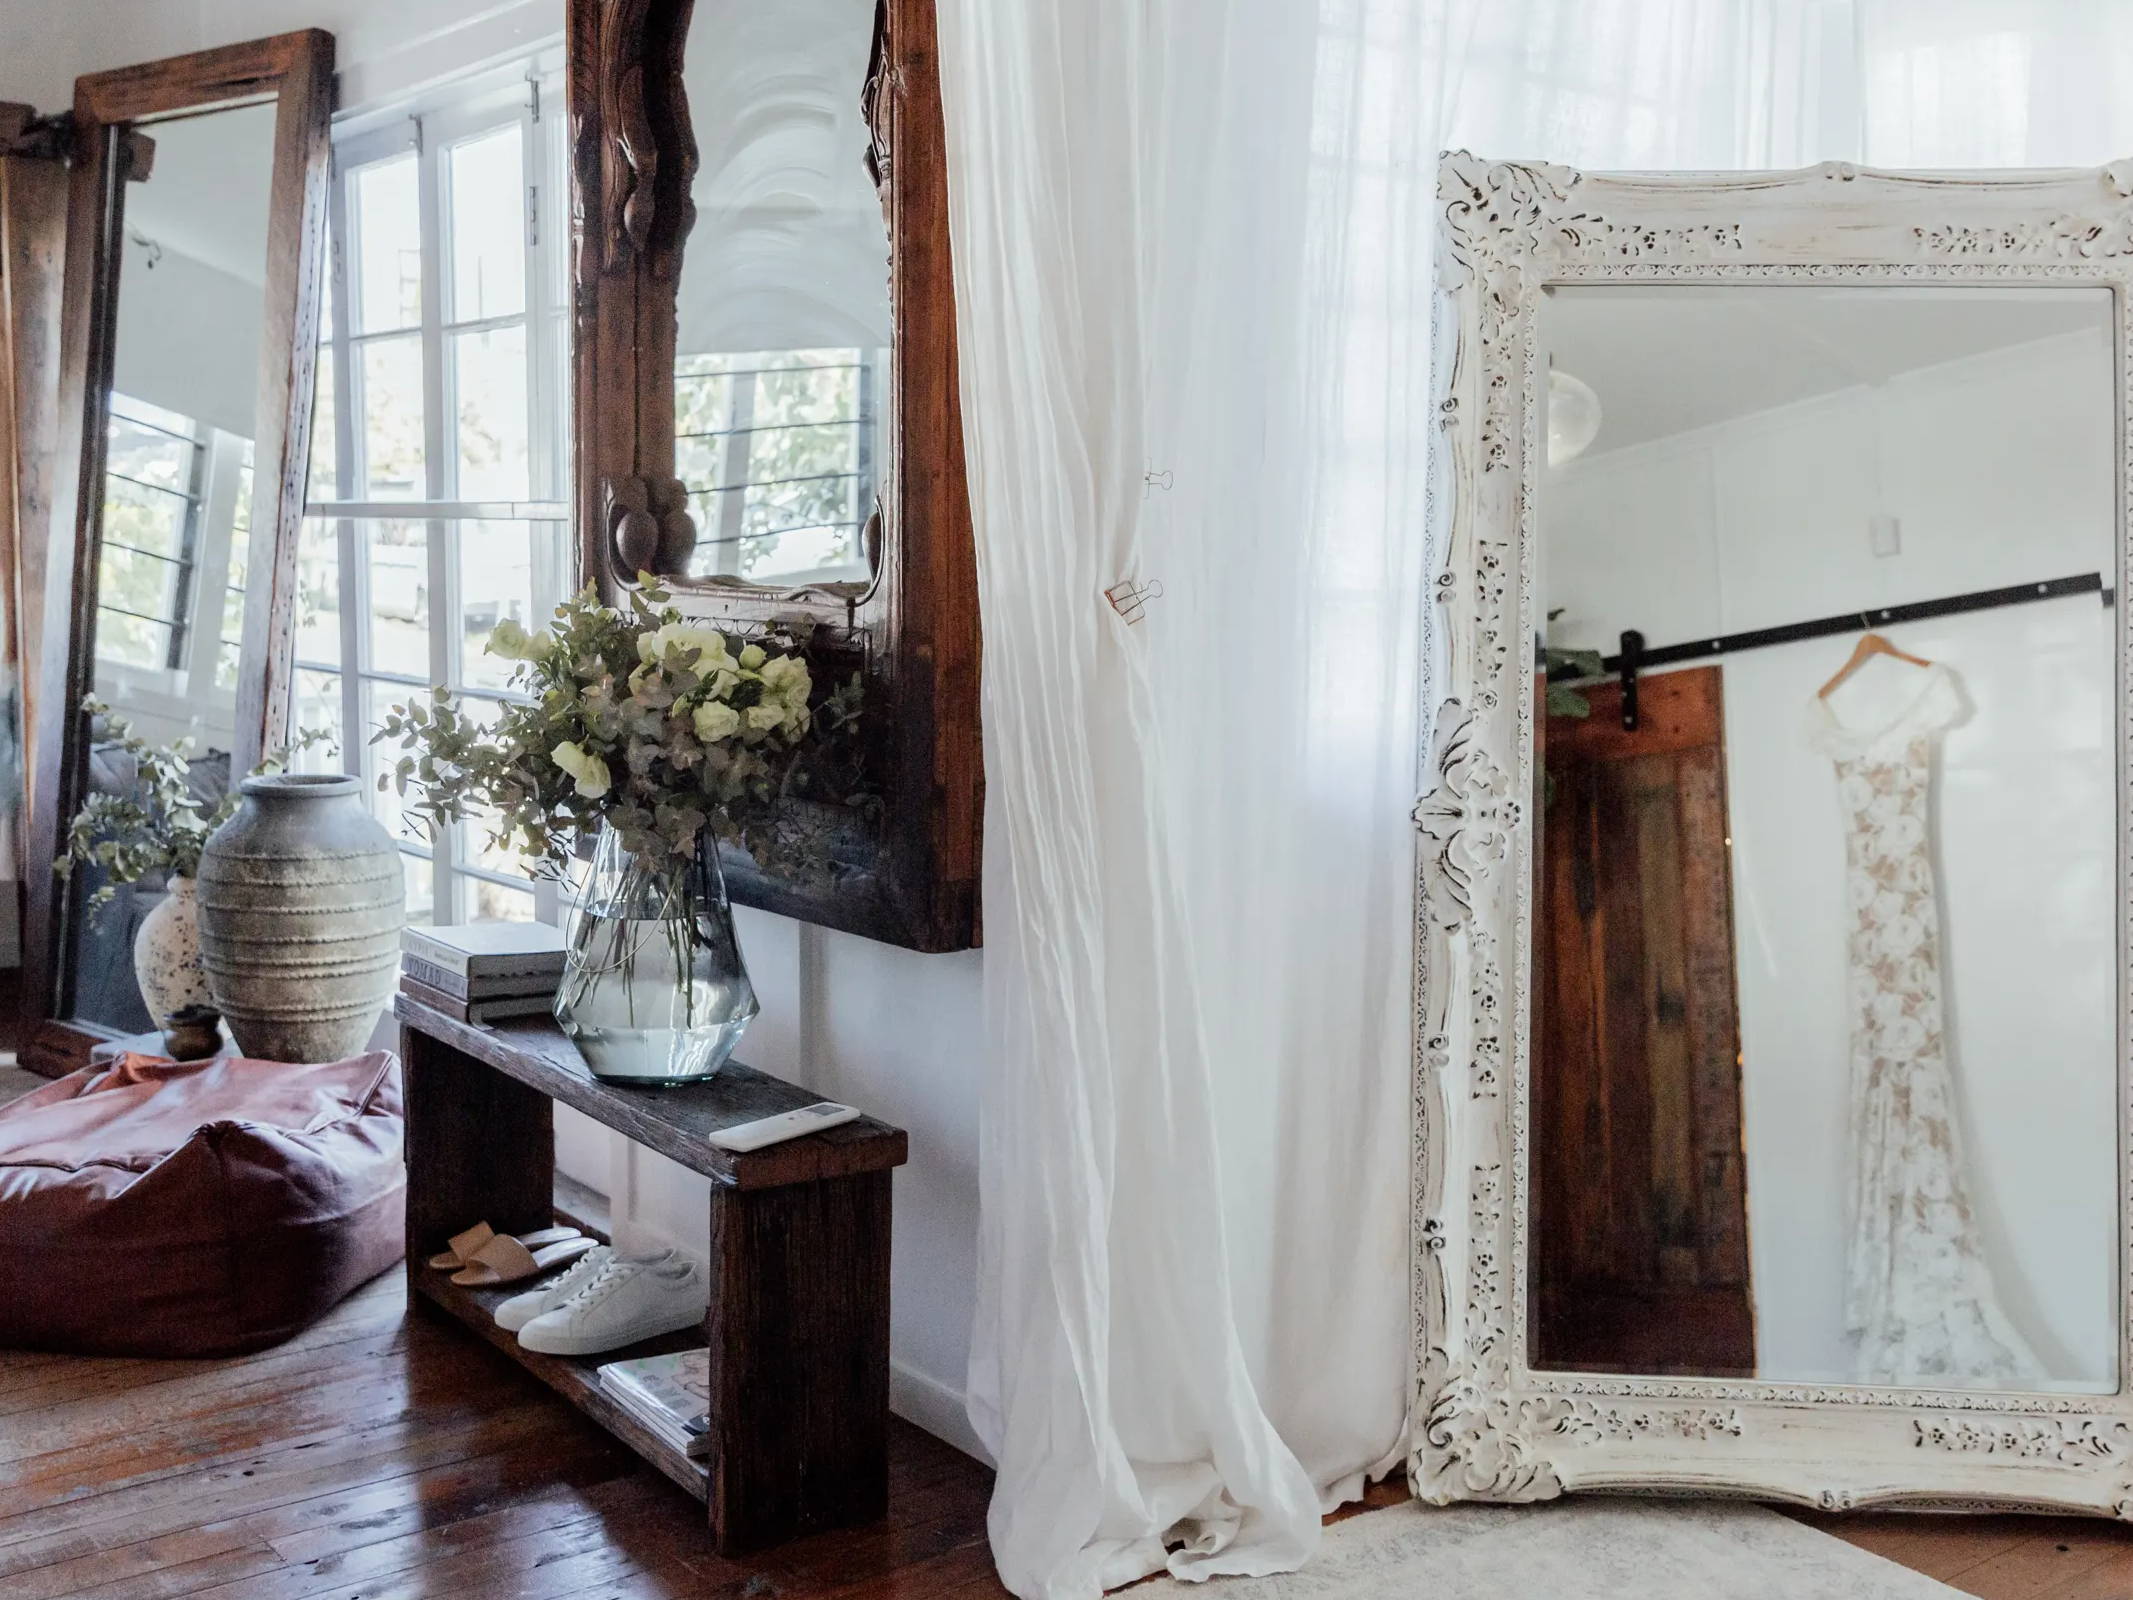 Three large mirrors and bohemian decor inside bridal shop